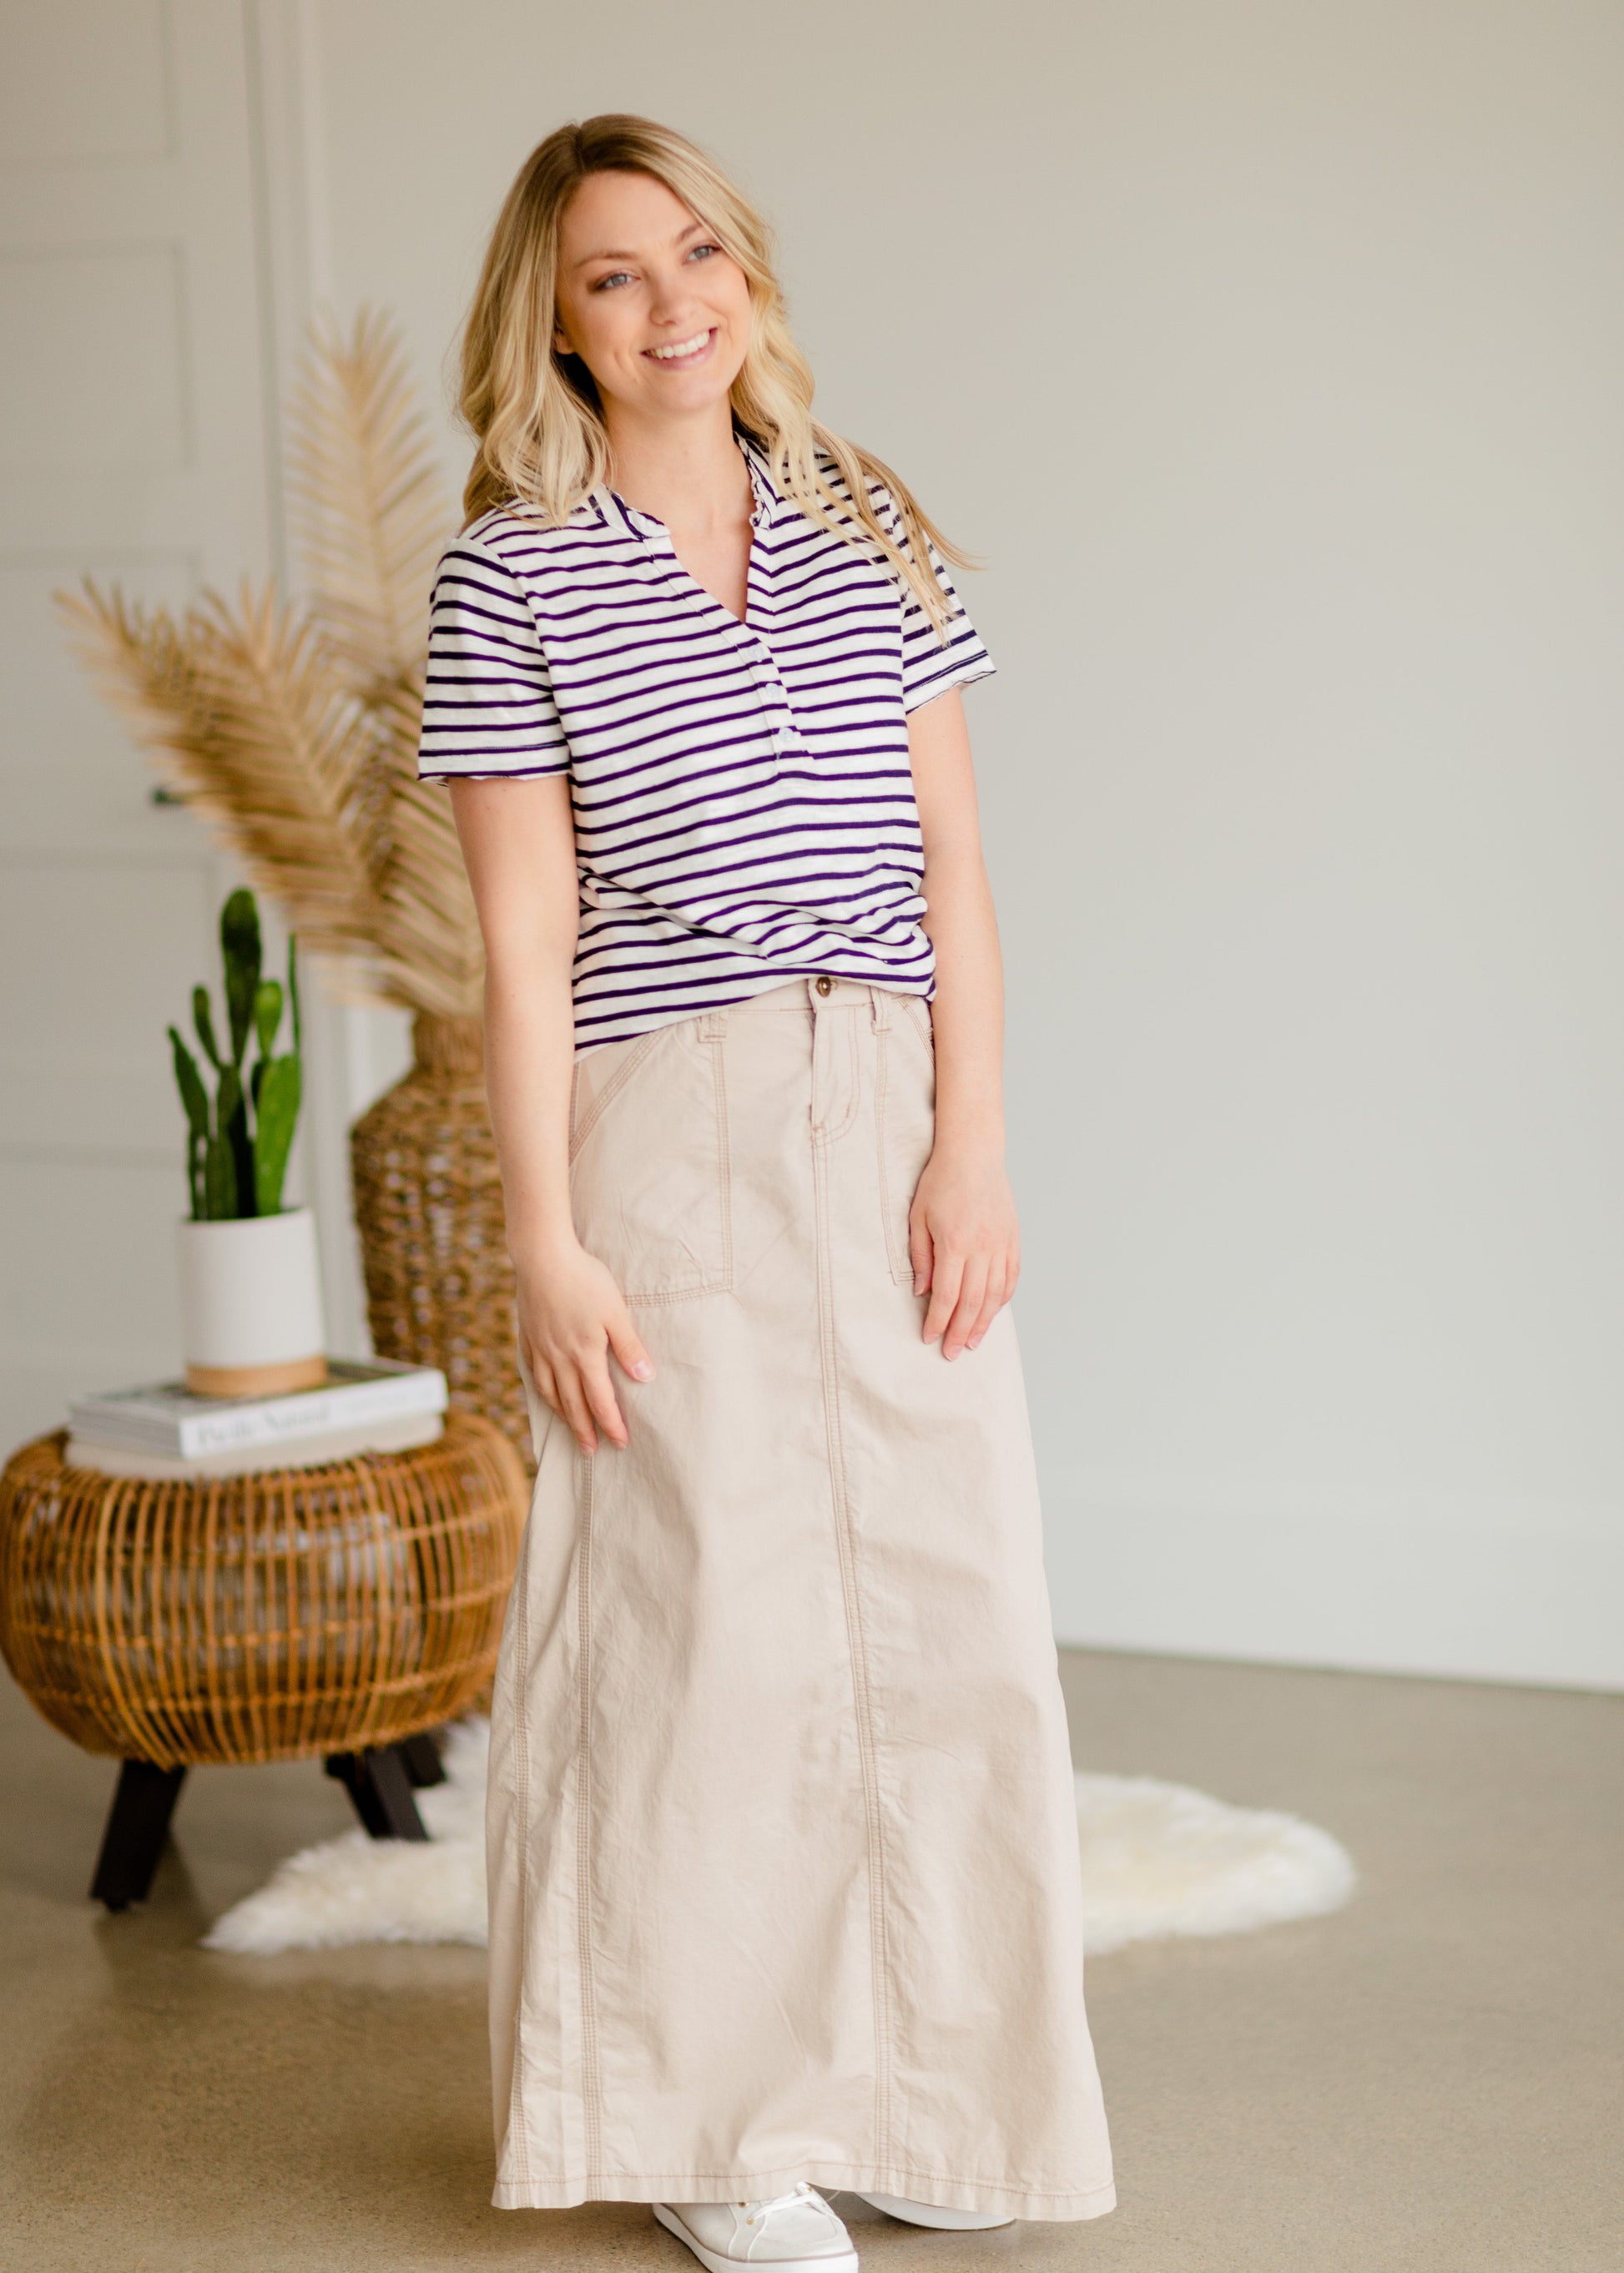 Melinda Khaki Long Utility Skirt - FINAL SALE Skirts